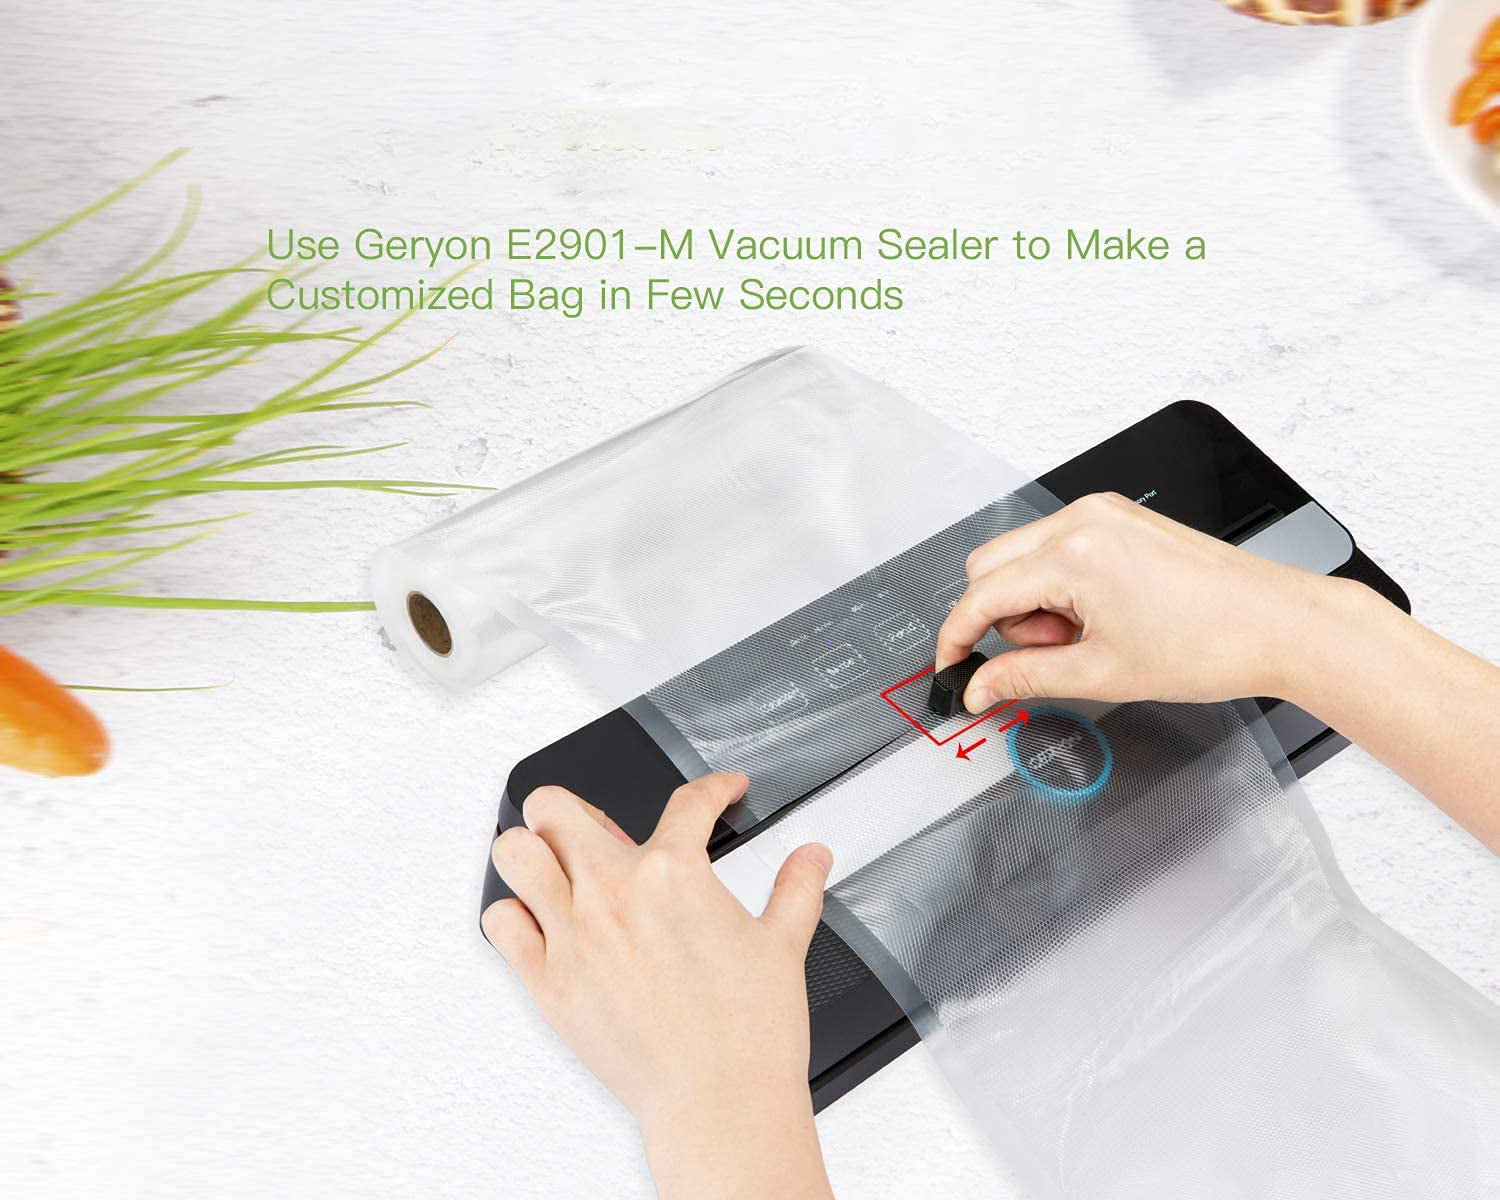 GERYON Vacuum Sealer Bags Rolls 11 x 120' Keeper with Cutter Box – Geryon  Kitchen